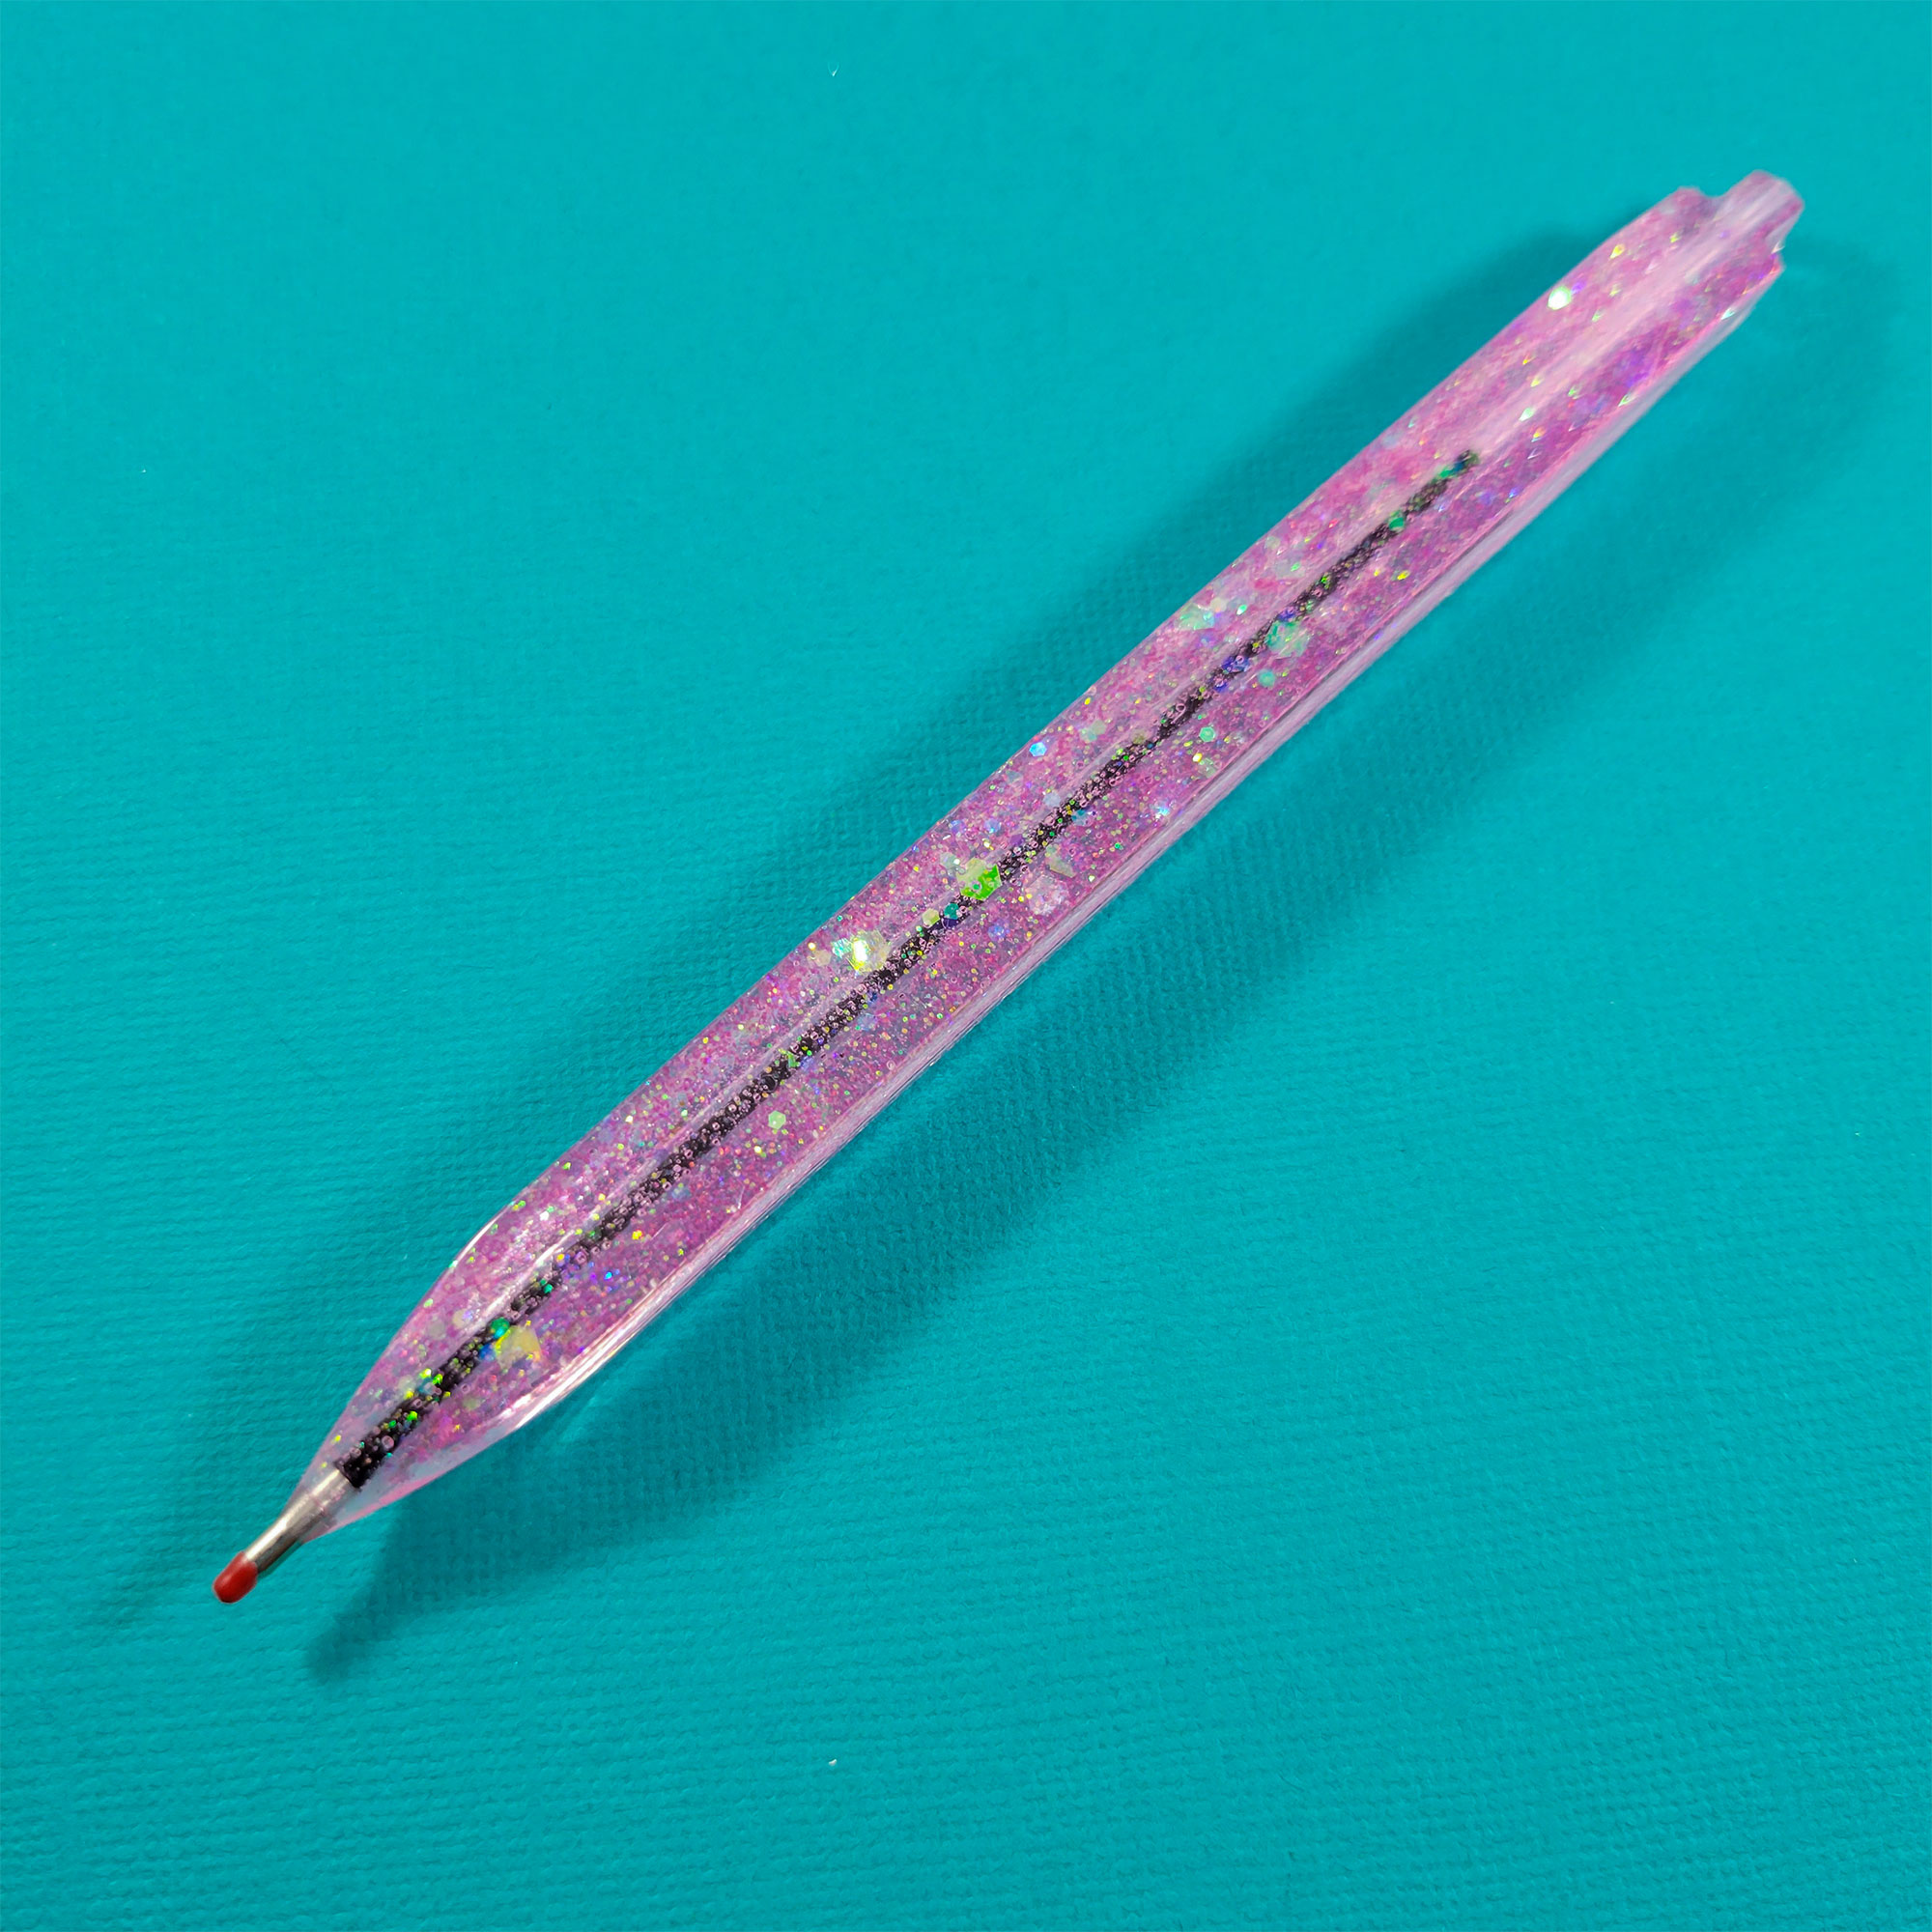 Glittery Pink Handmade Ball Point Pen by Wilde Designs